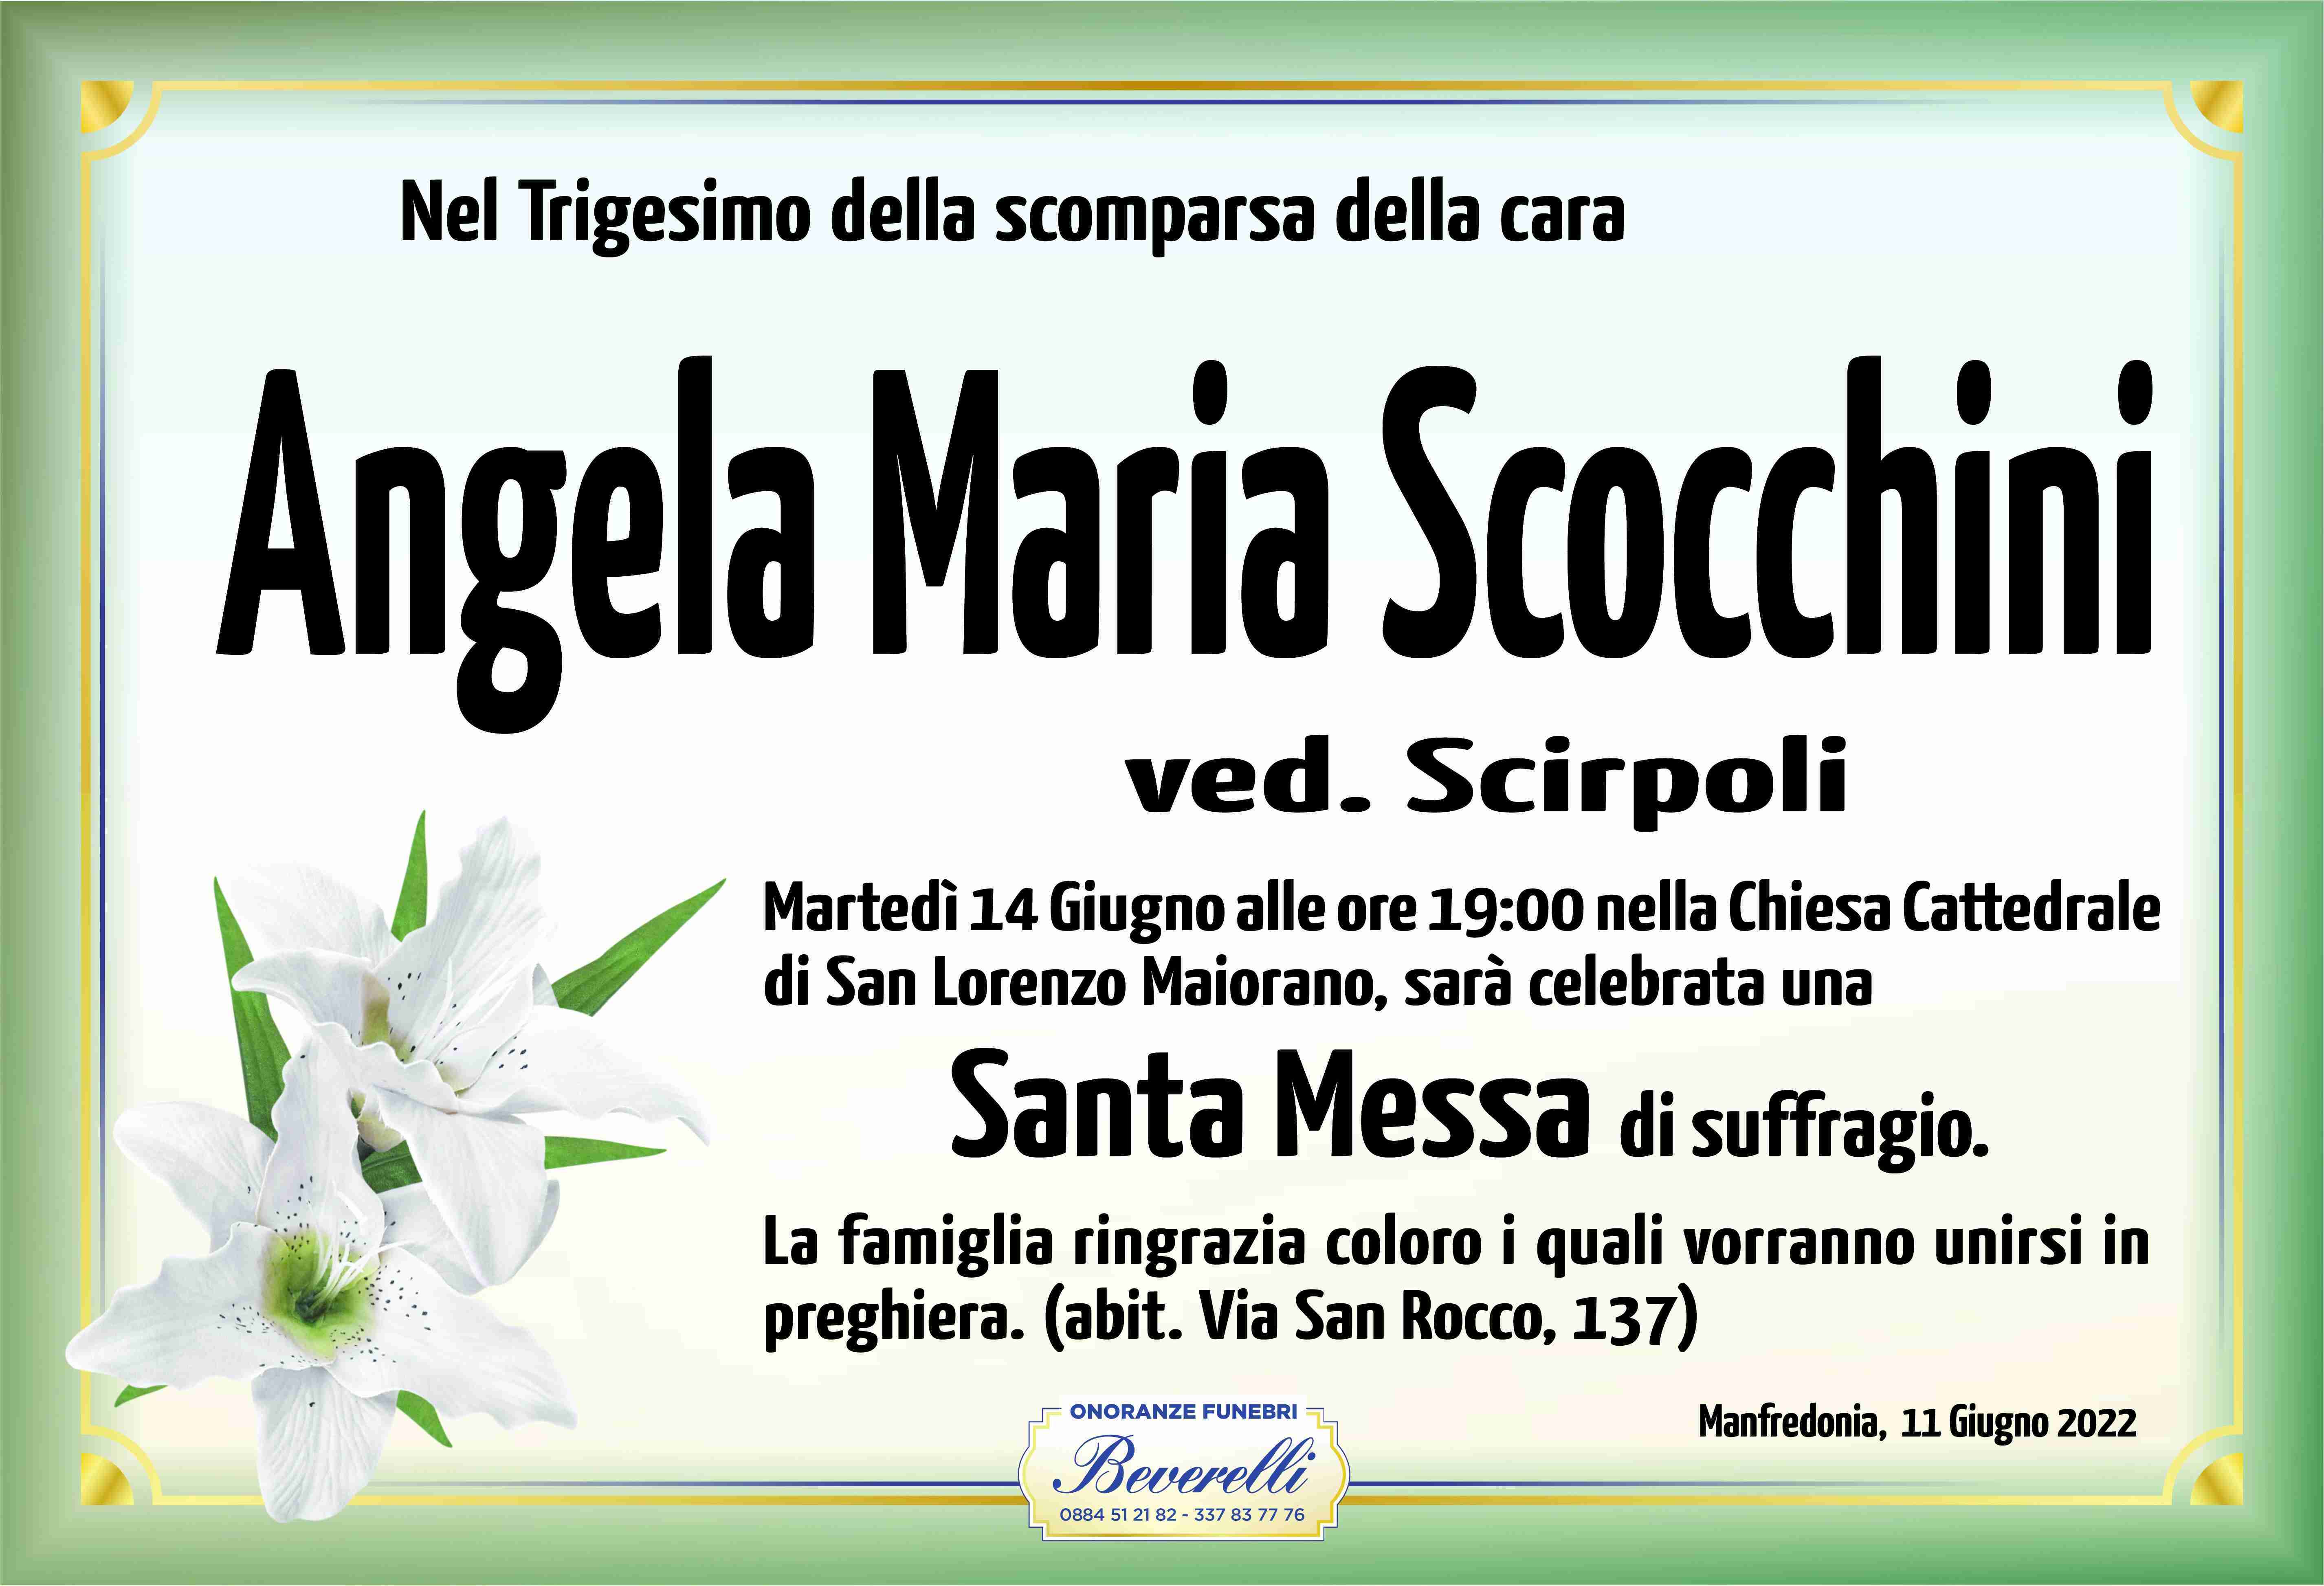 Angela Maria Scocchini